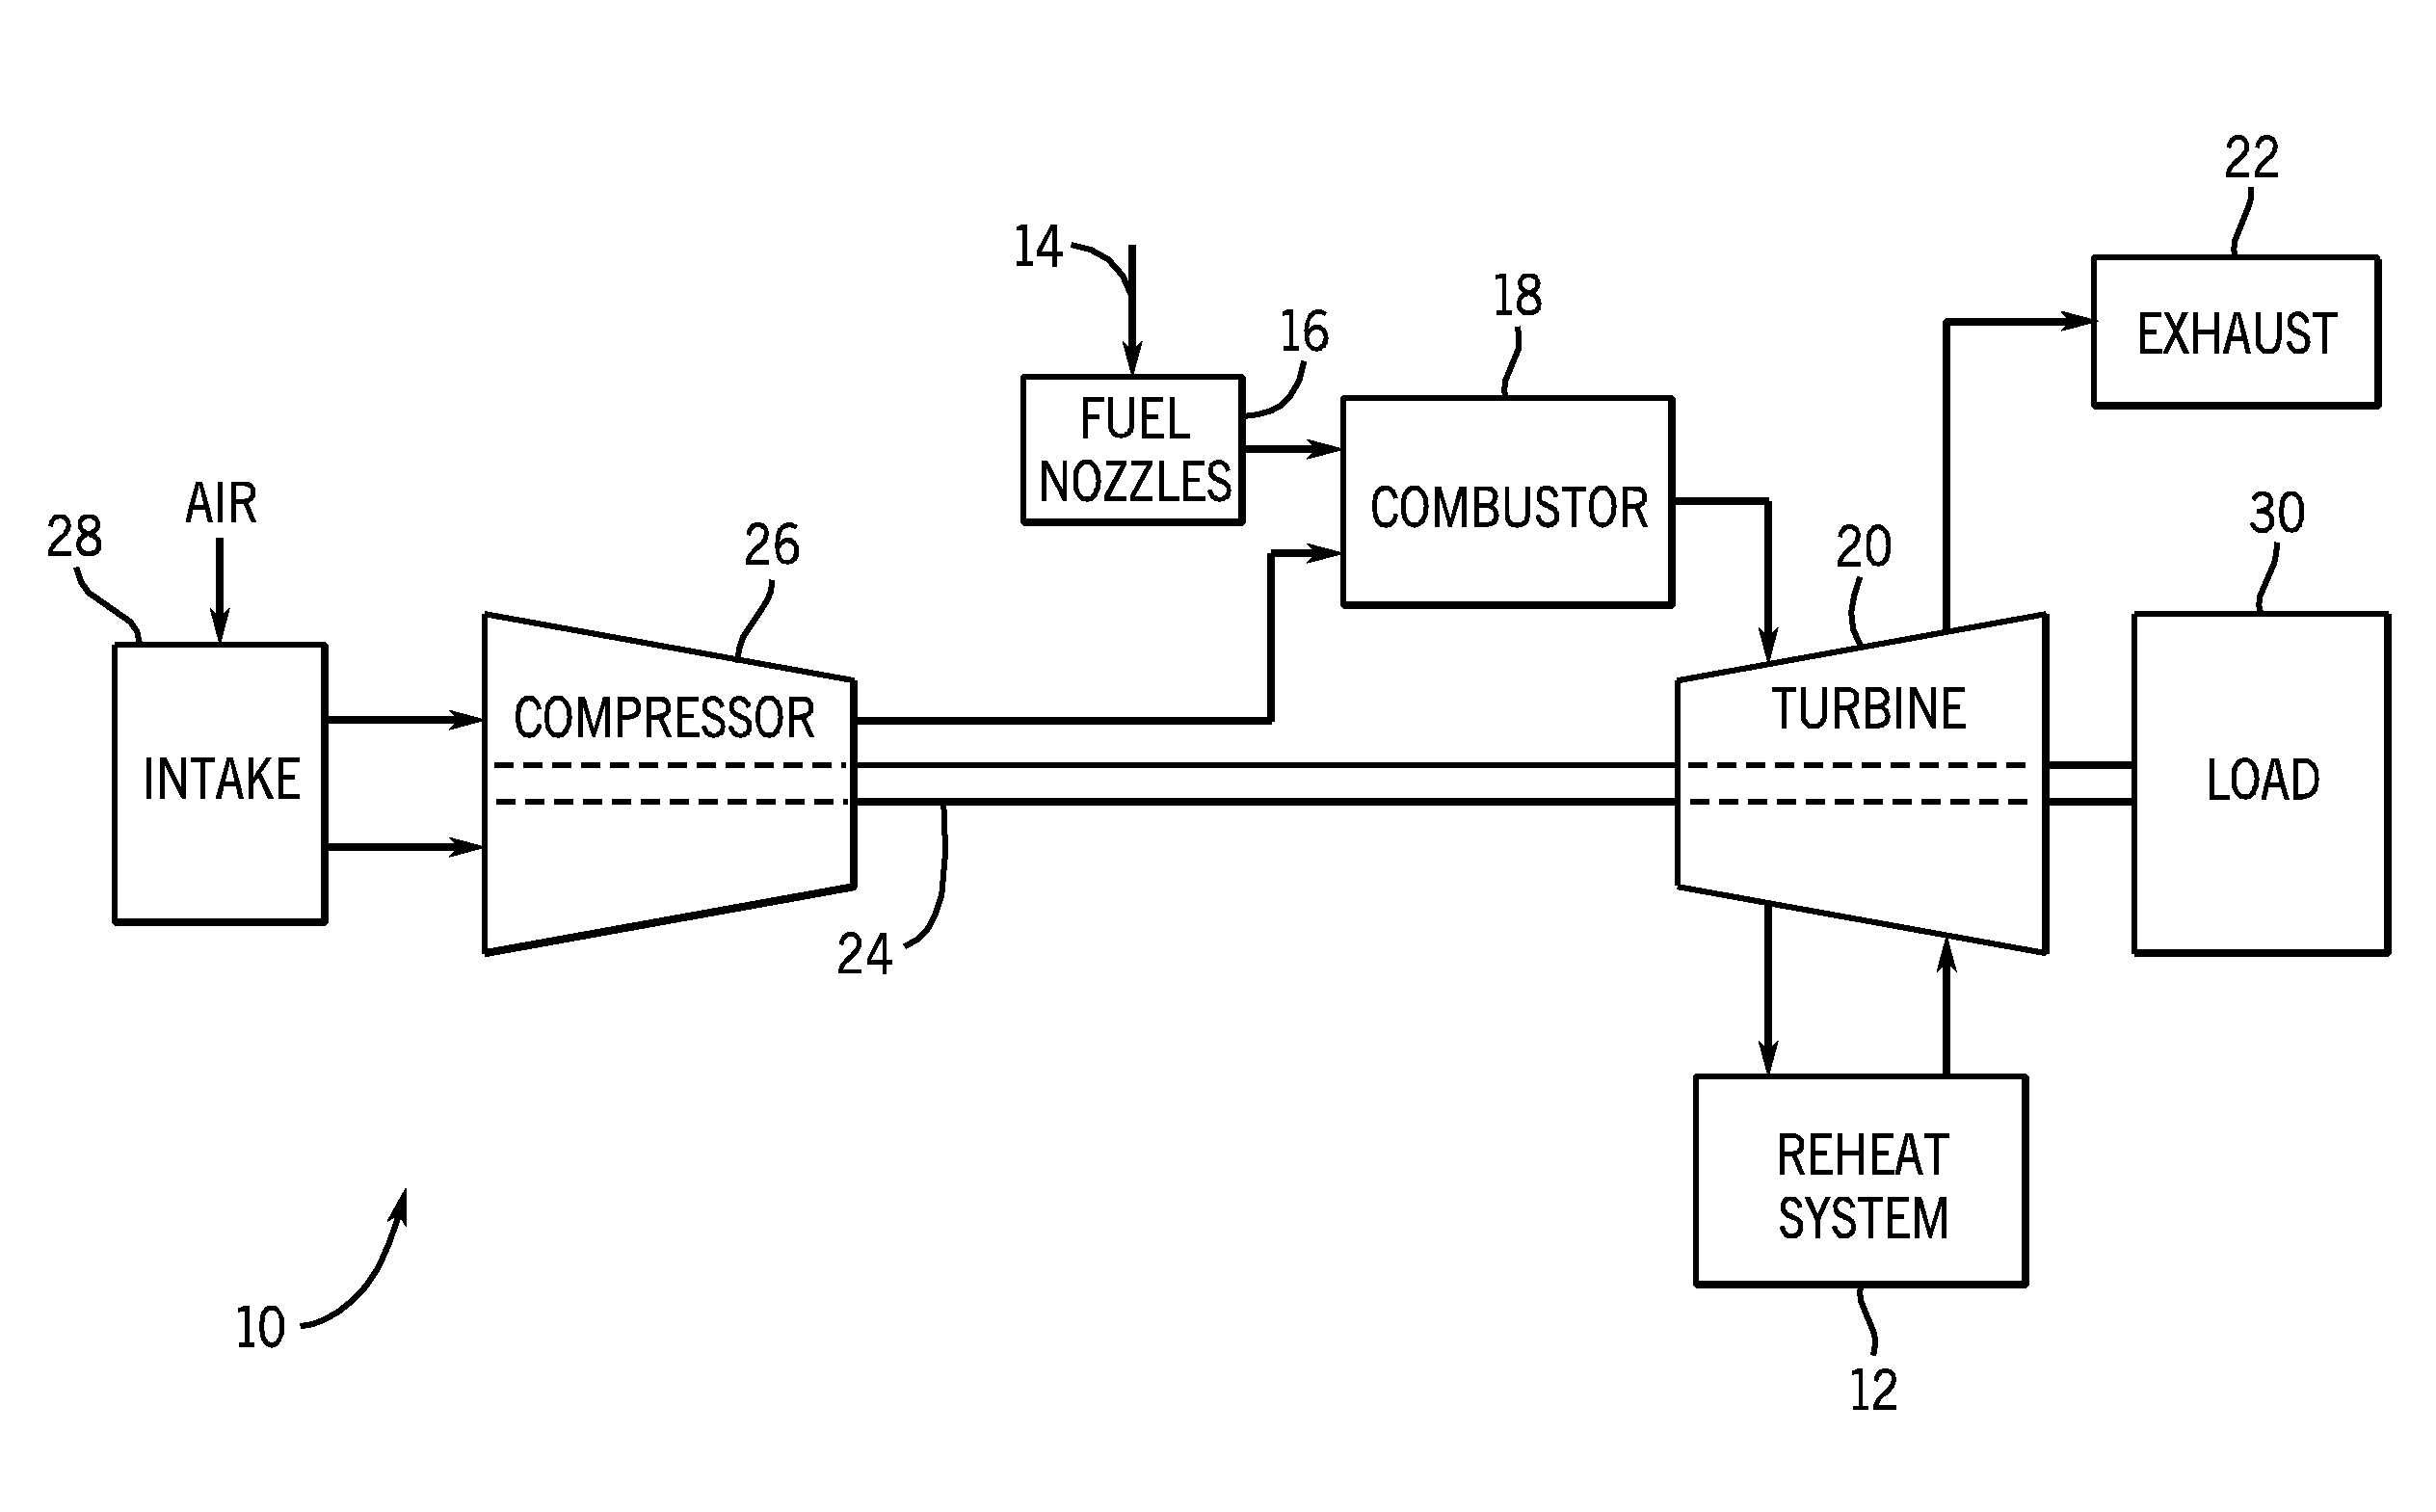 Gas turbine system having premixed injector vanes